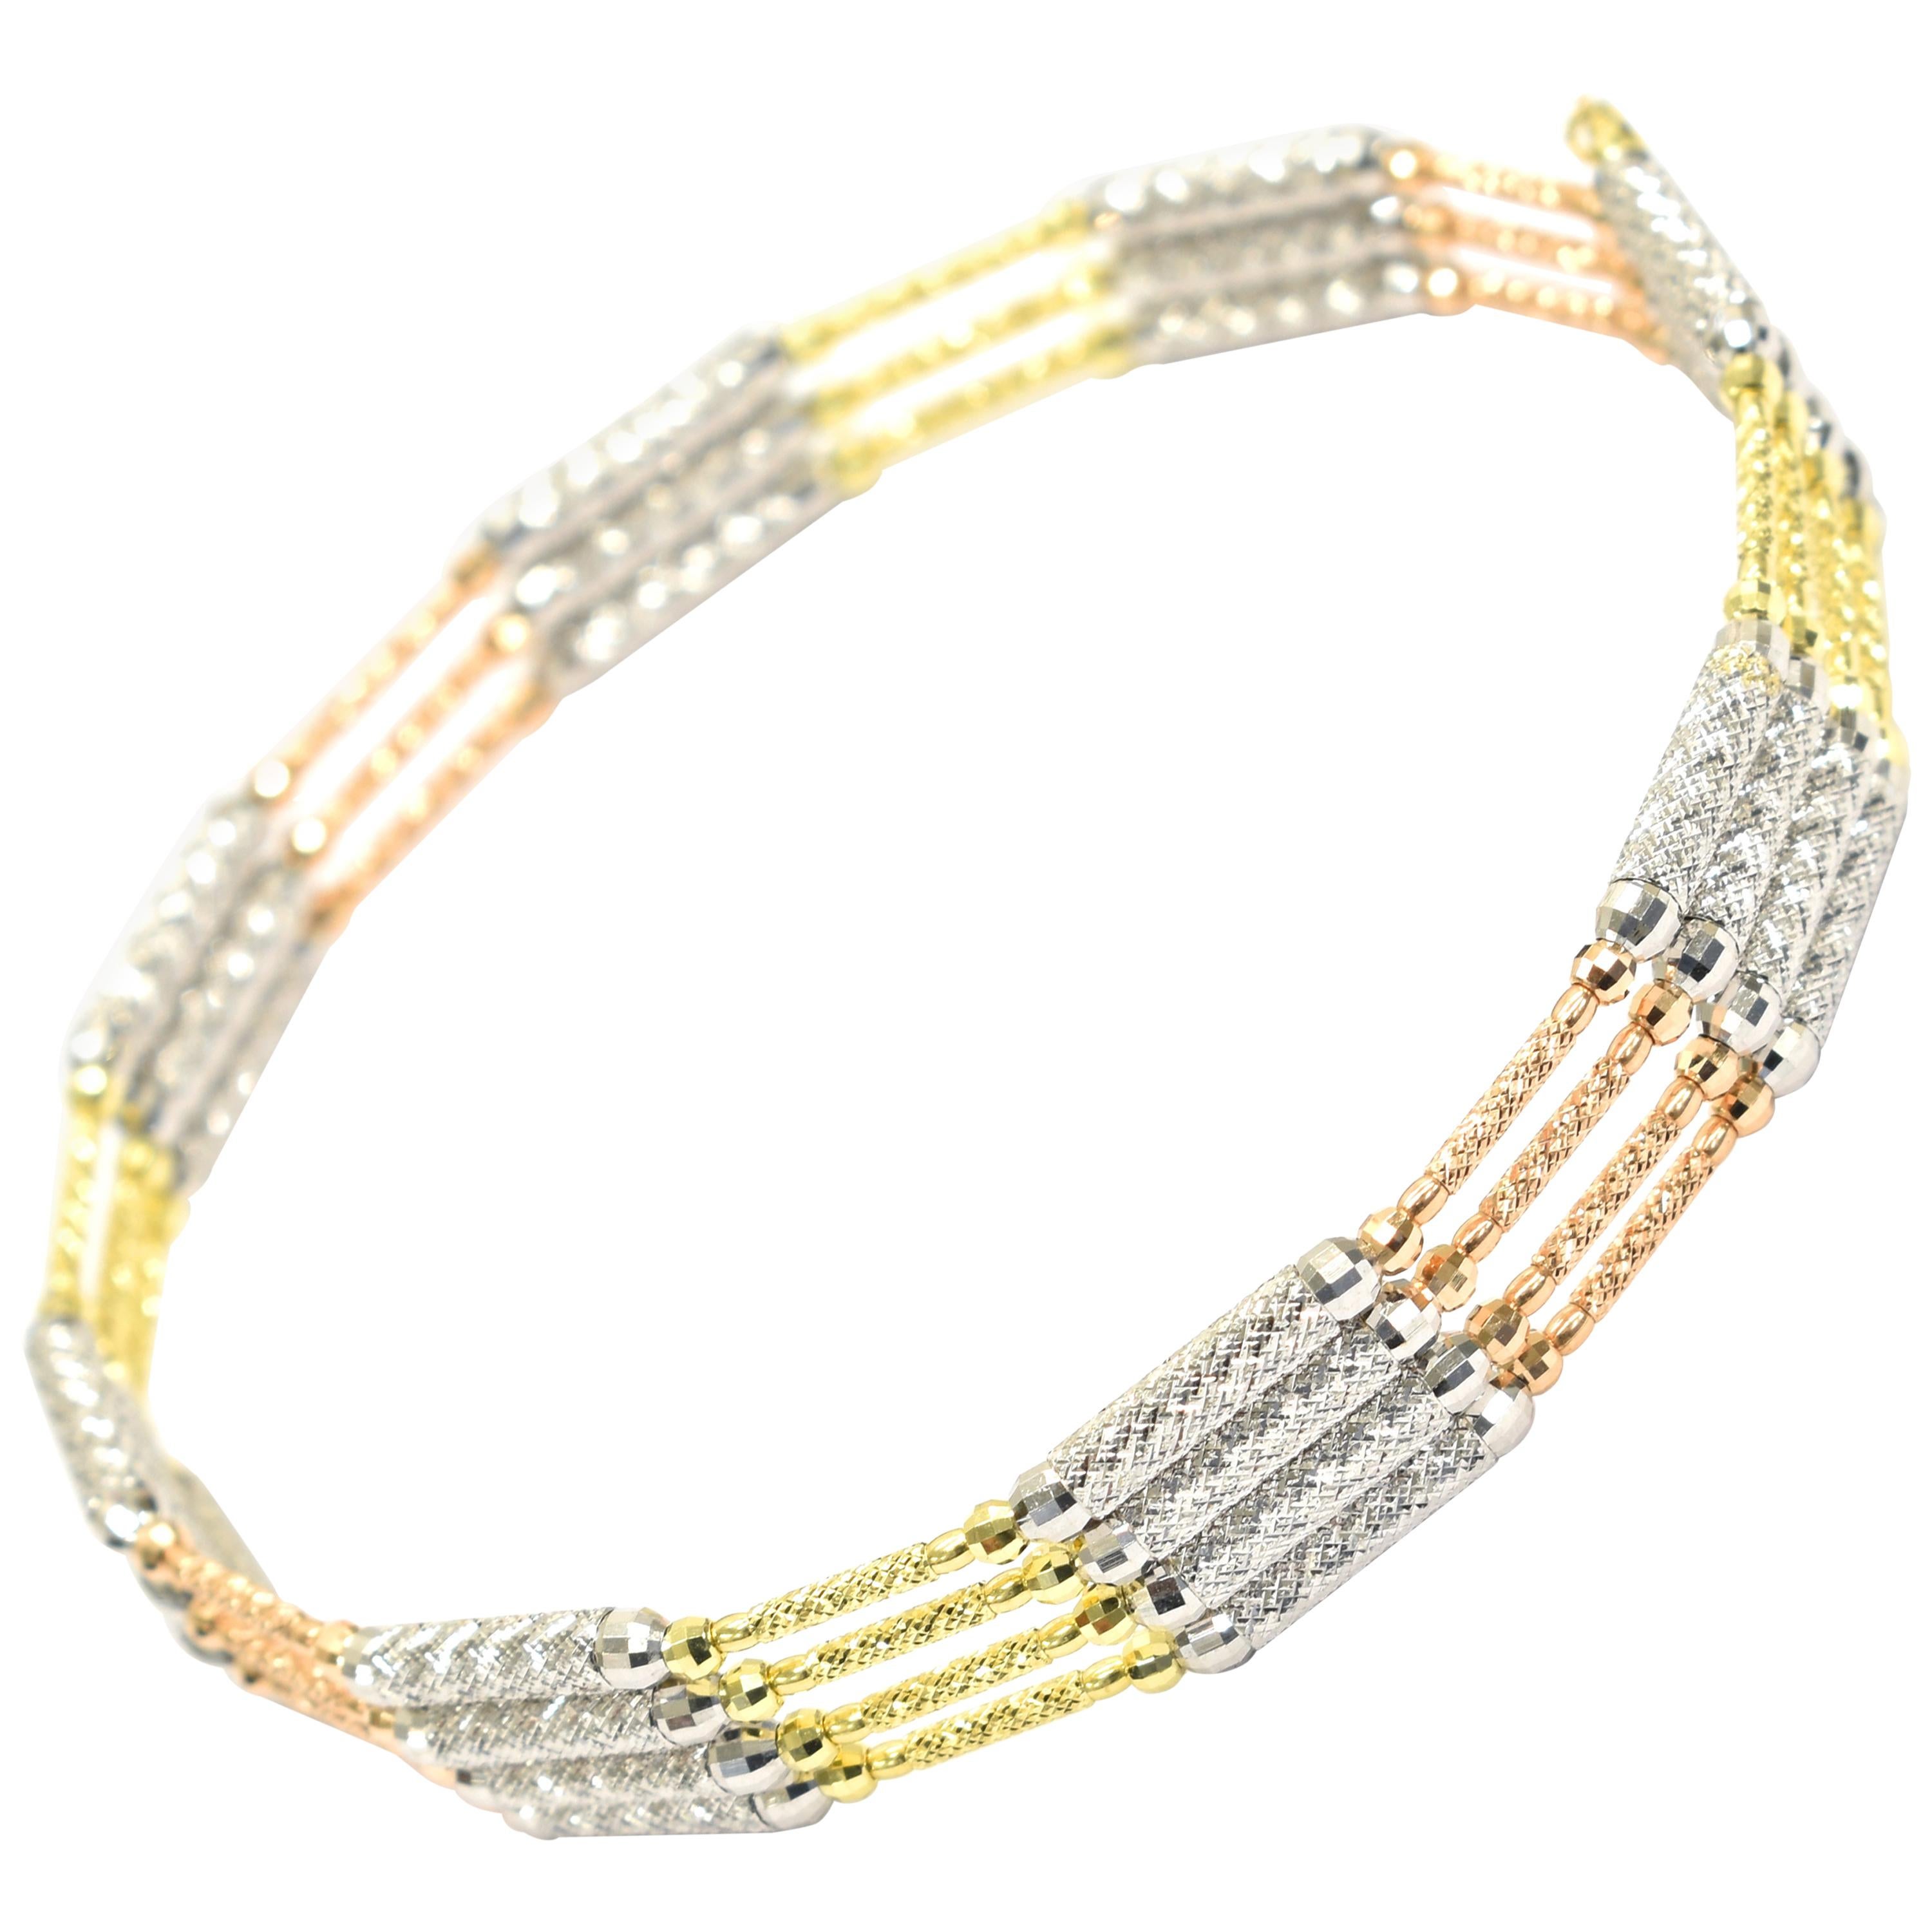 Multi Purpose Magnetic Bracelet/Necklace Made in 18 Karat Yellow/White/Rose Gold